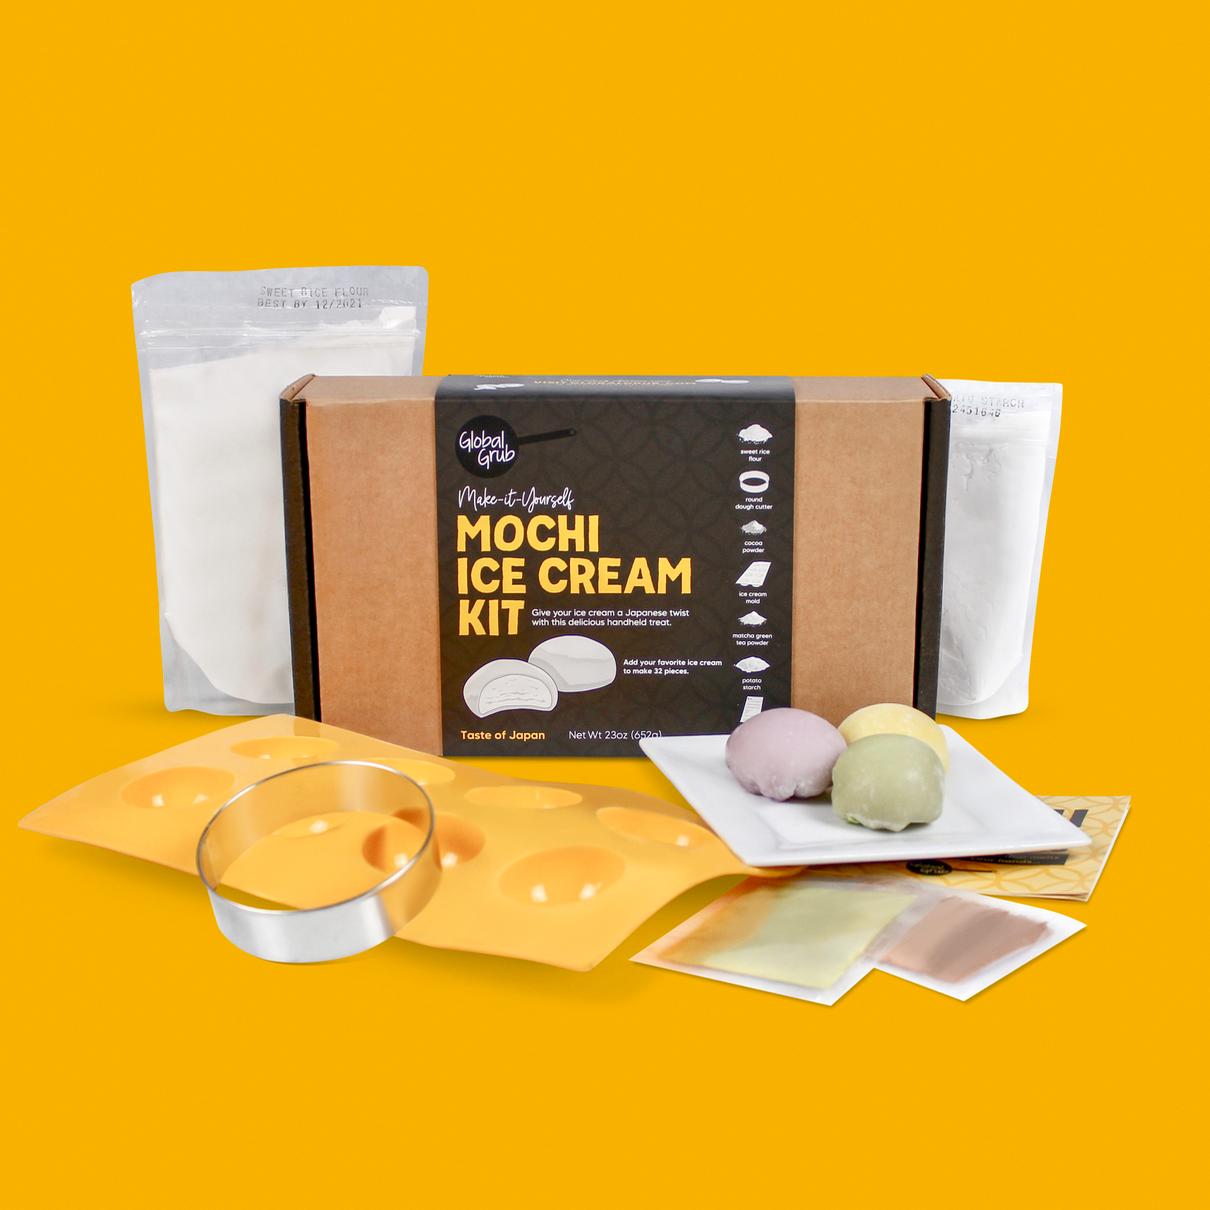 postkantoor vertegenwoordiger bemanning DIY Mochi Ice Cream Kit | Mochi Making Kit | Global Grub - Global Grub